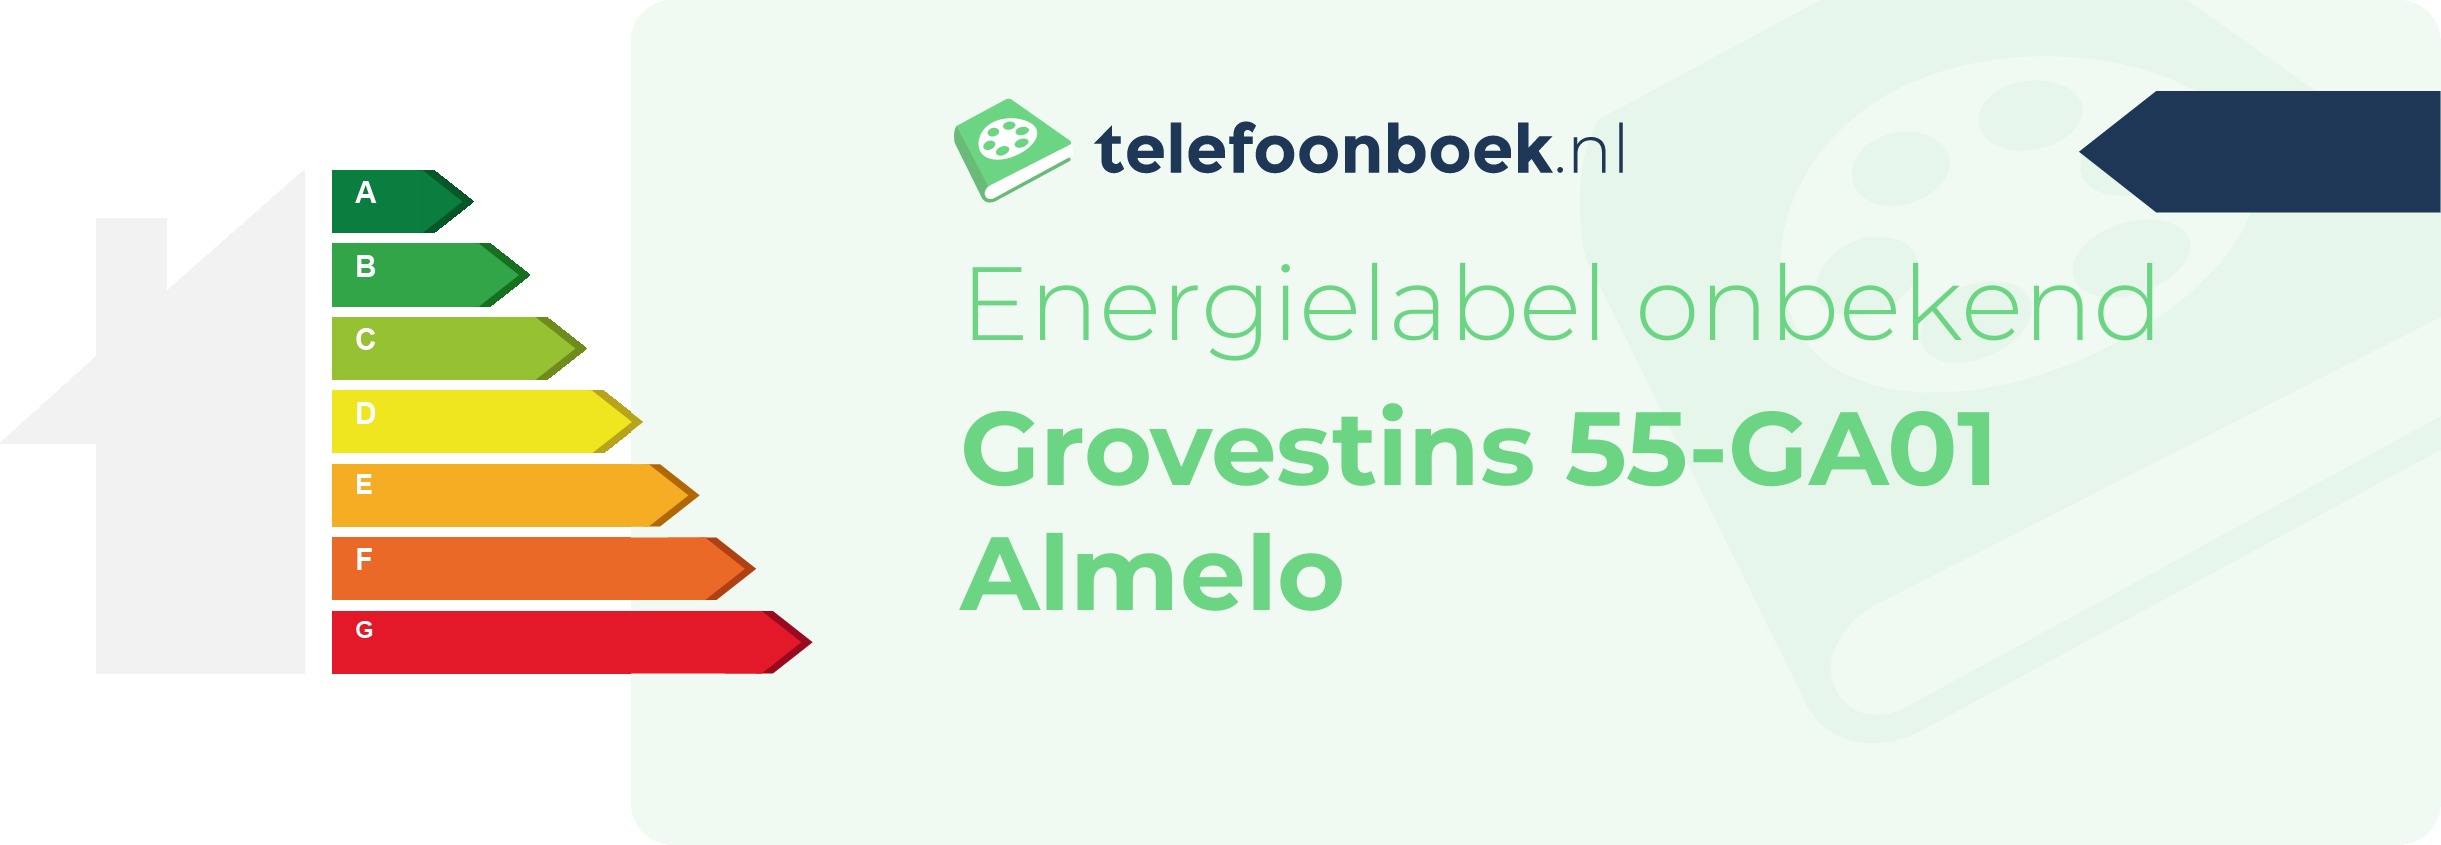 Energielabel Grovestins 55-GA01 Almelo